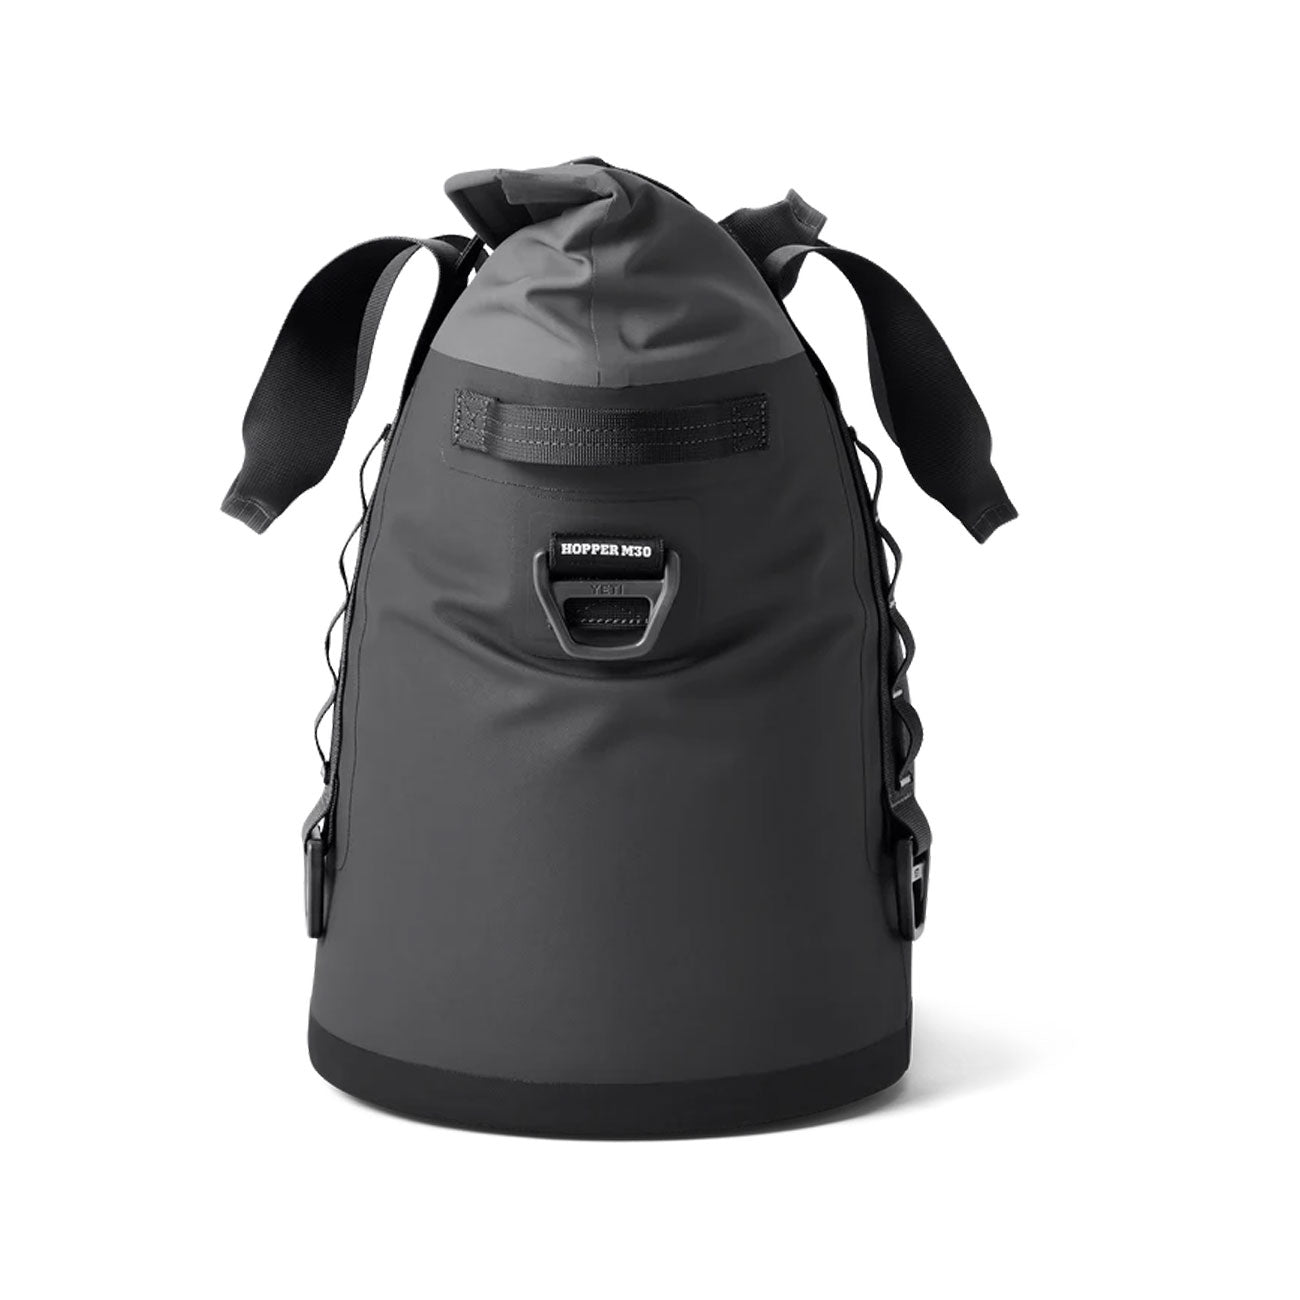 Yeti Hopper M30 Cool Bag 2.0 (Grau)  - Allike Store